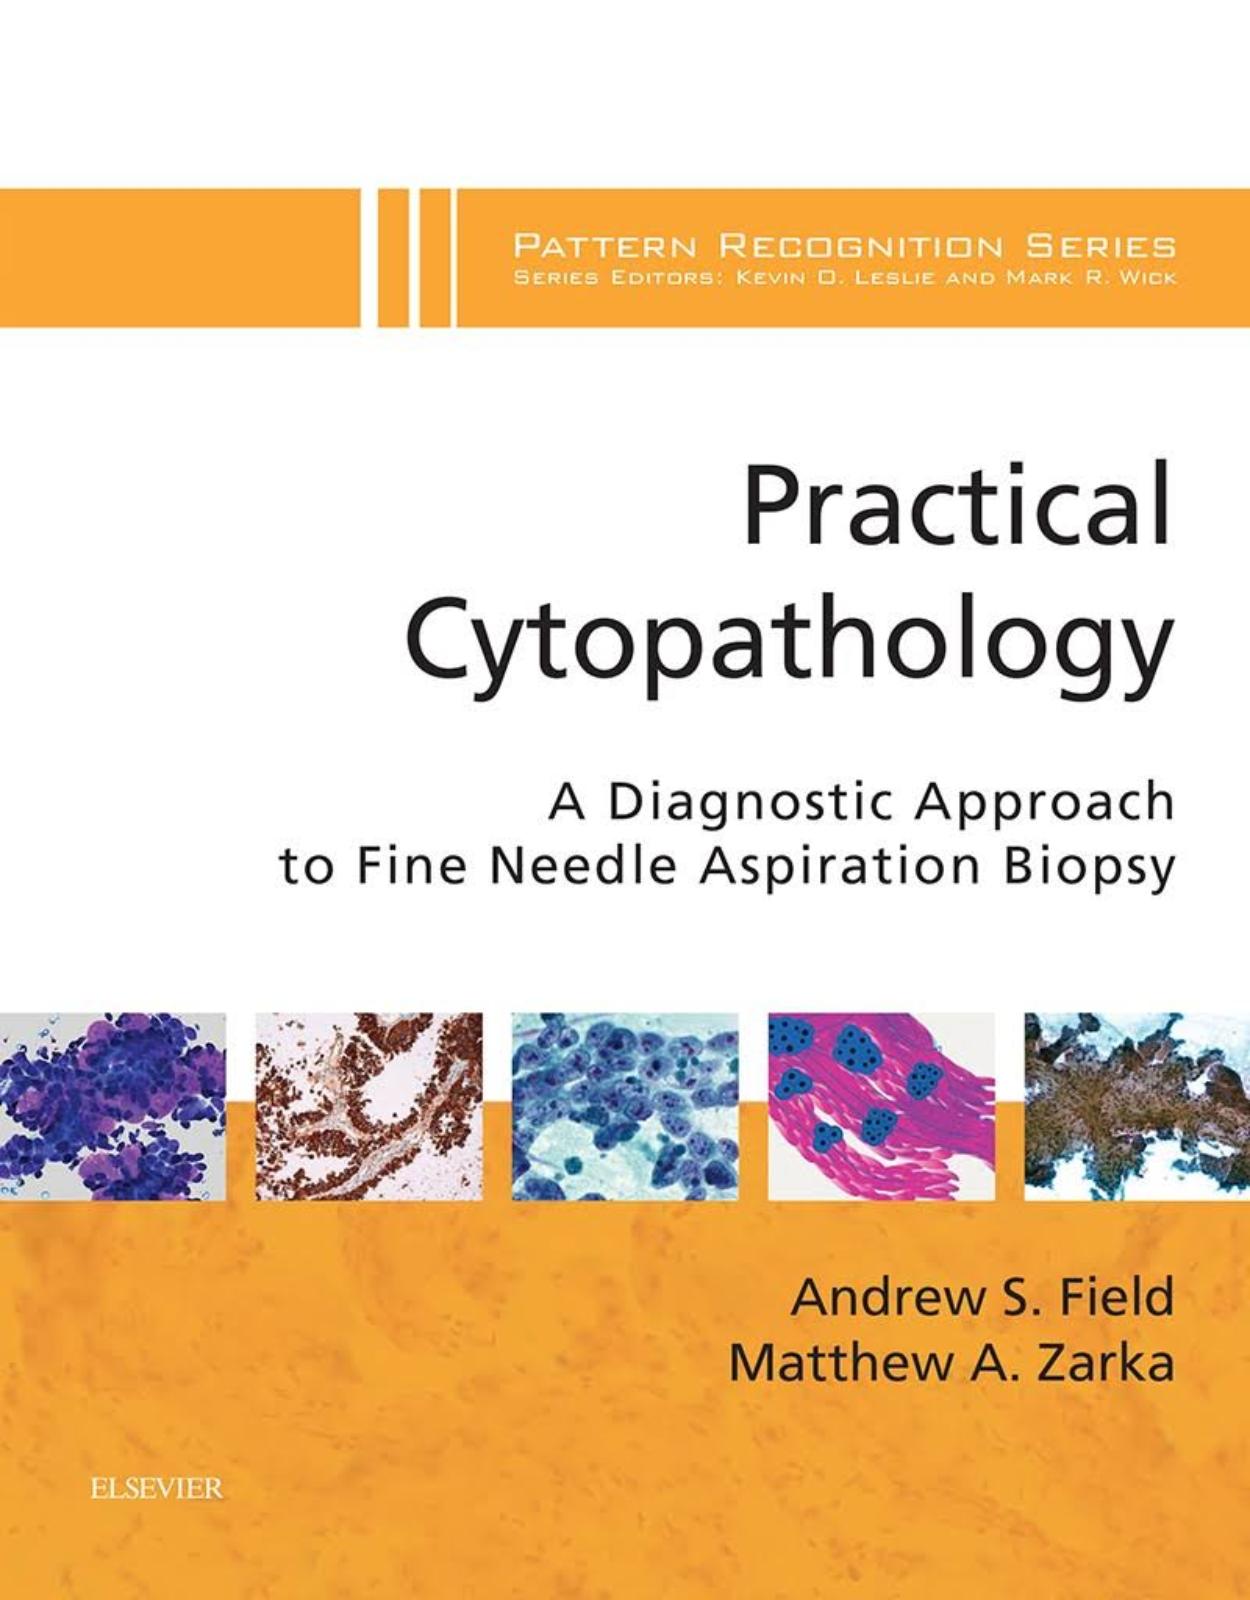 Practical Cytopathology: A Diagnostic Approach to Fine Needle Aspiration Biopsy